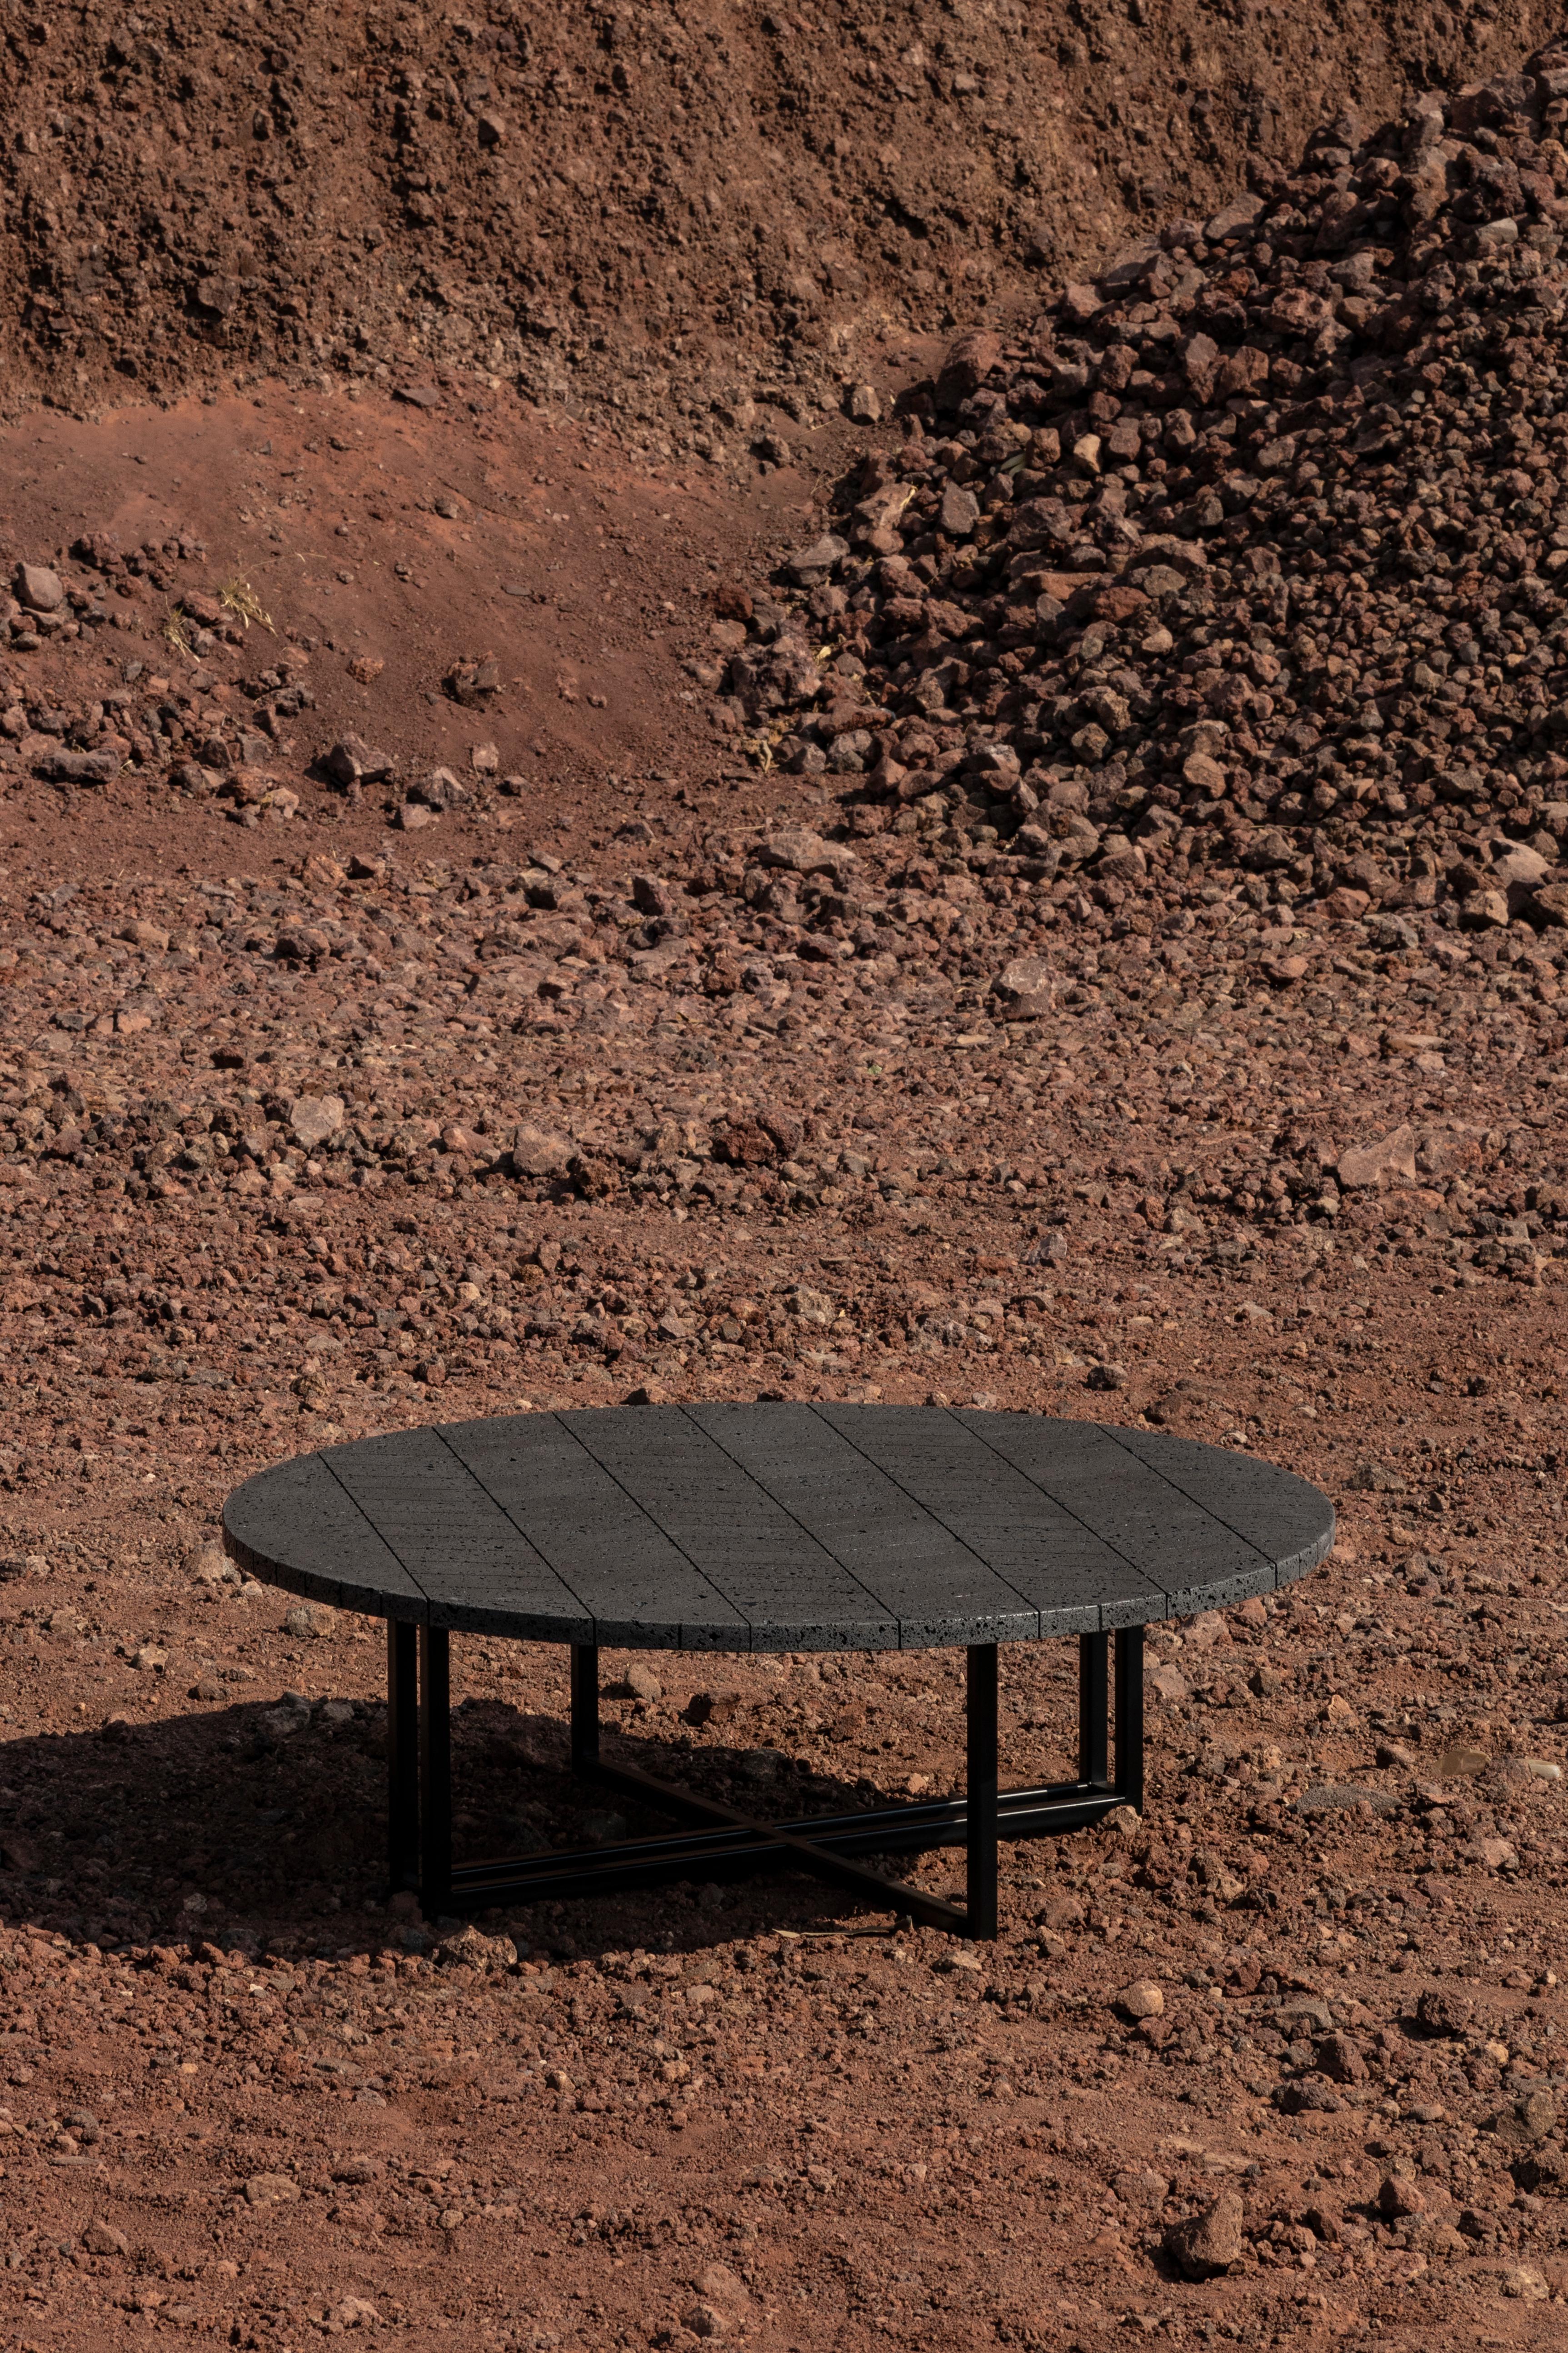 volcanic rock table